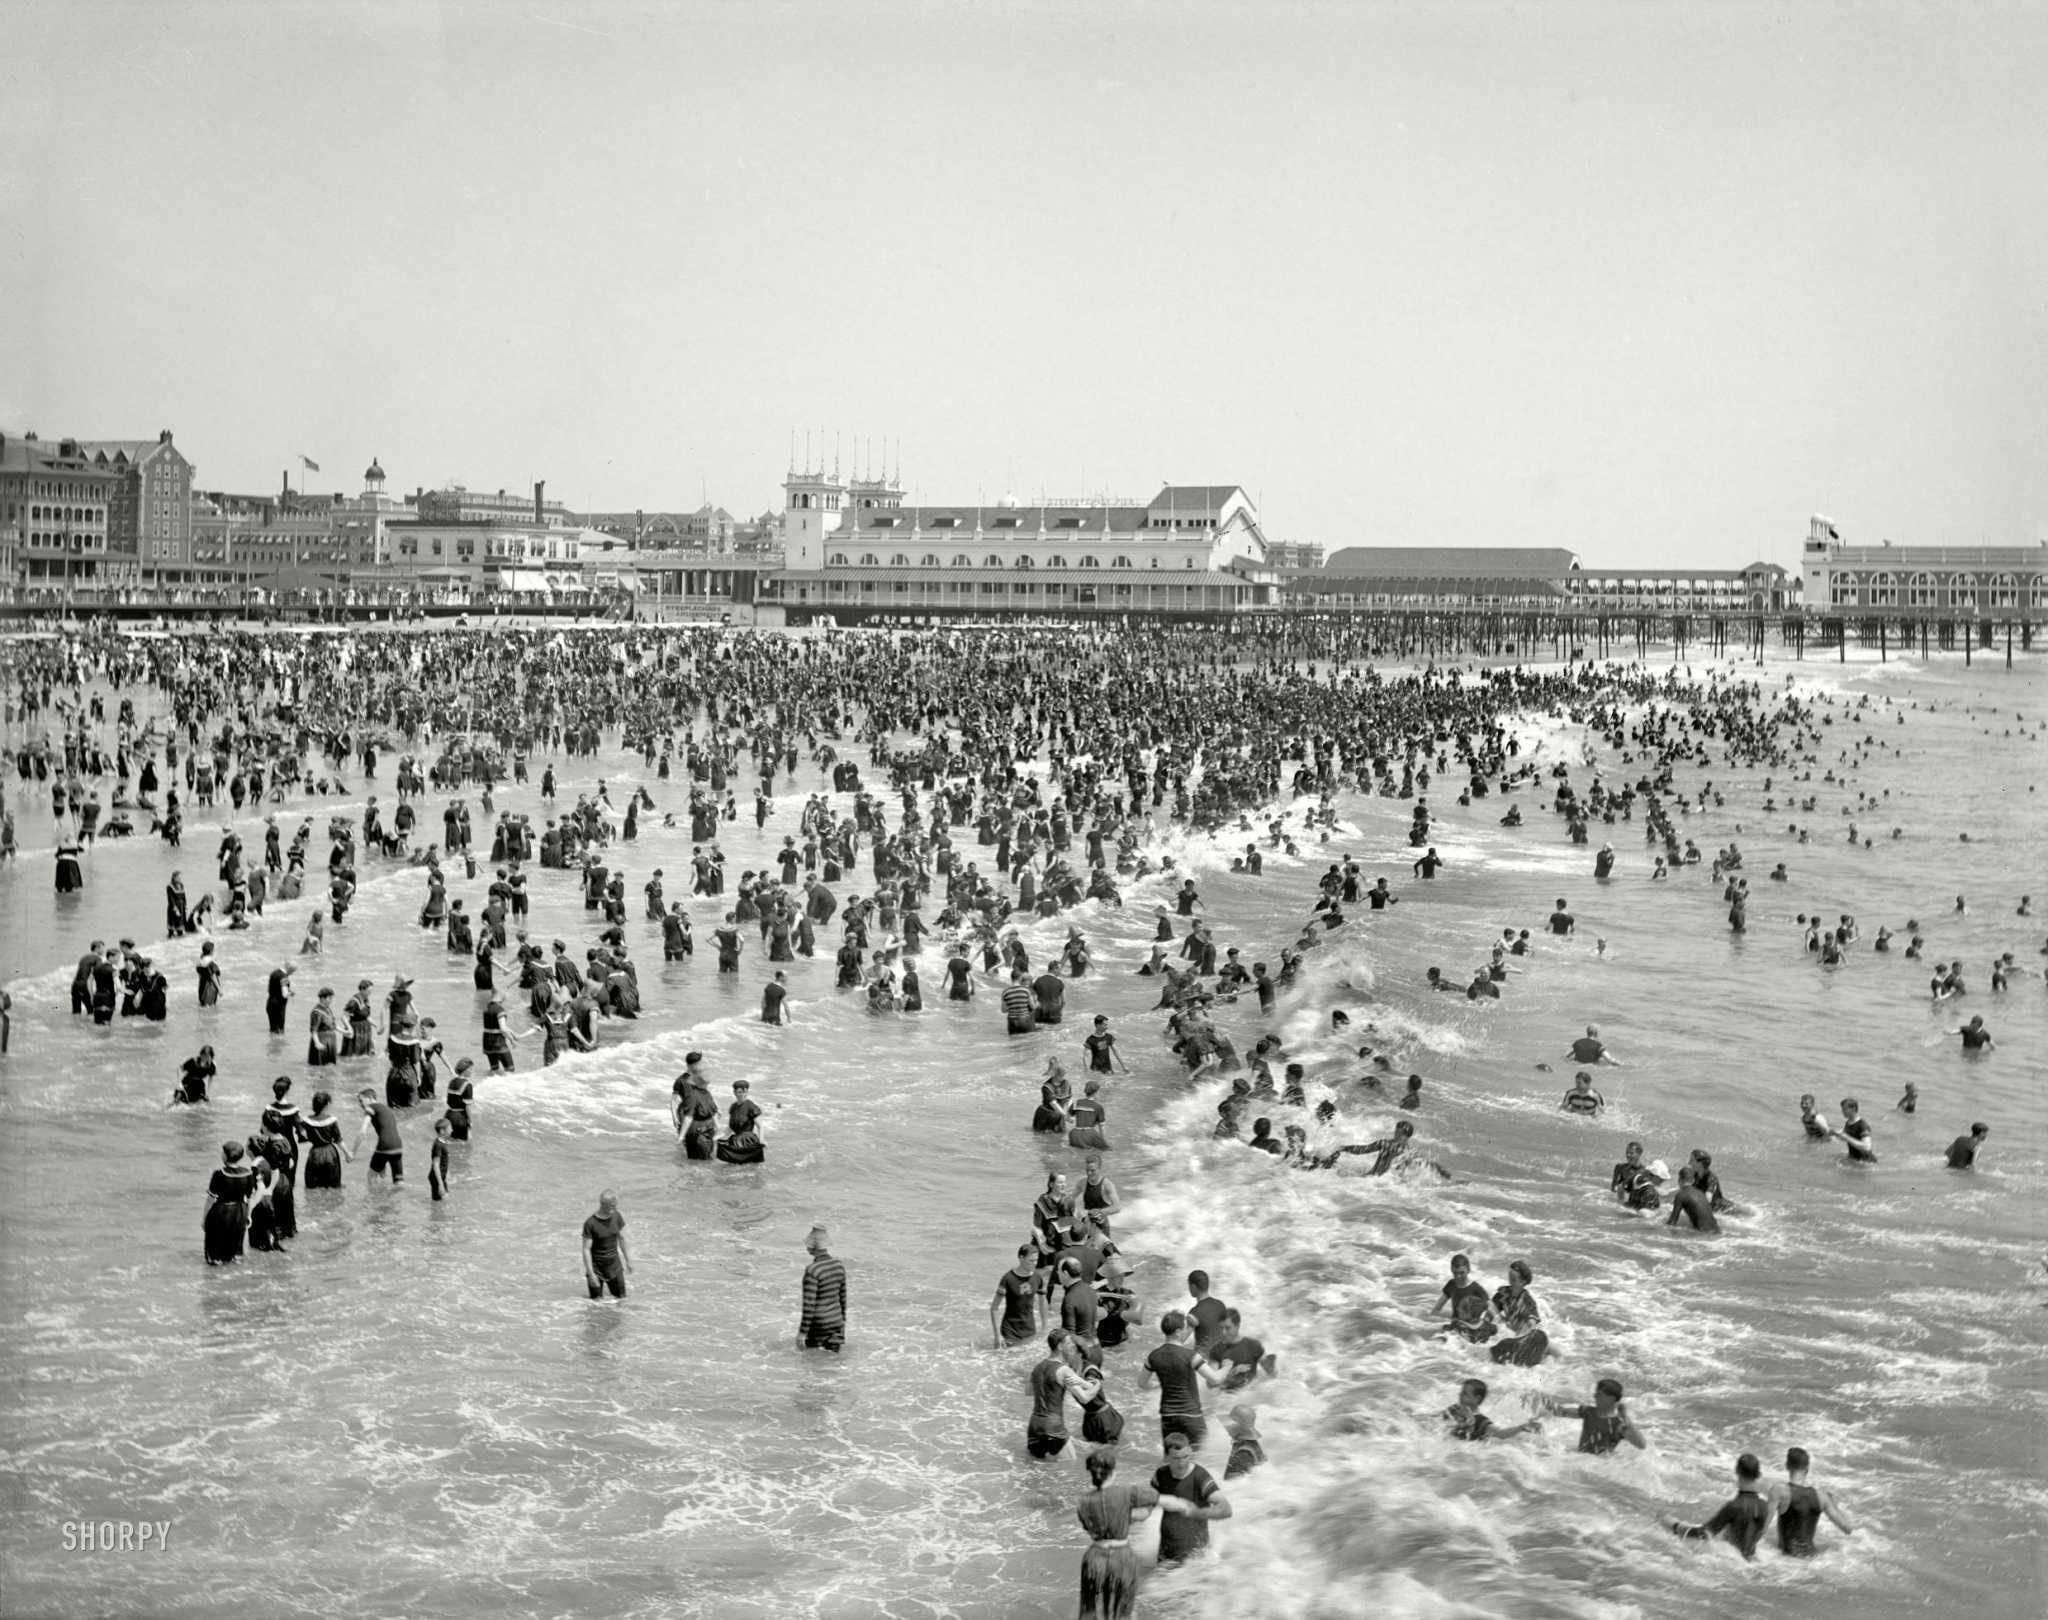 009 Jersey Shore 1940.jpg